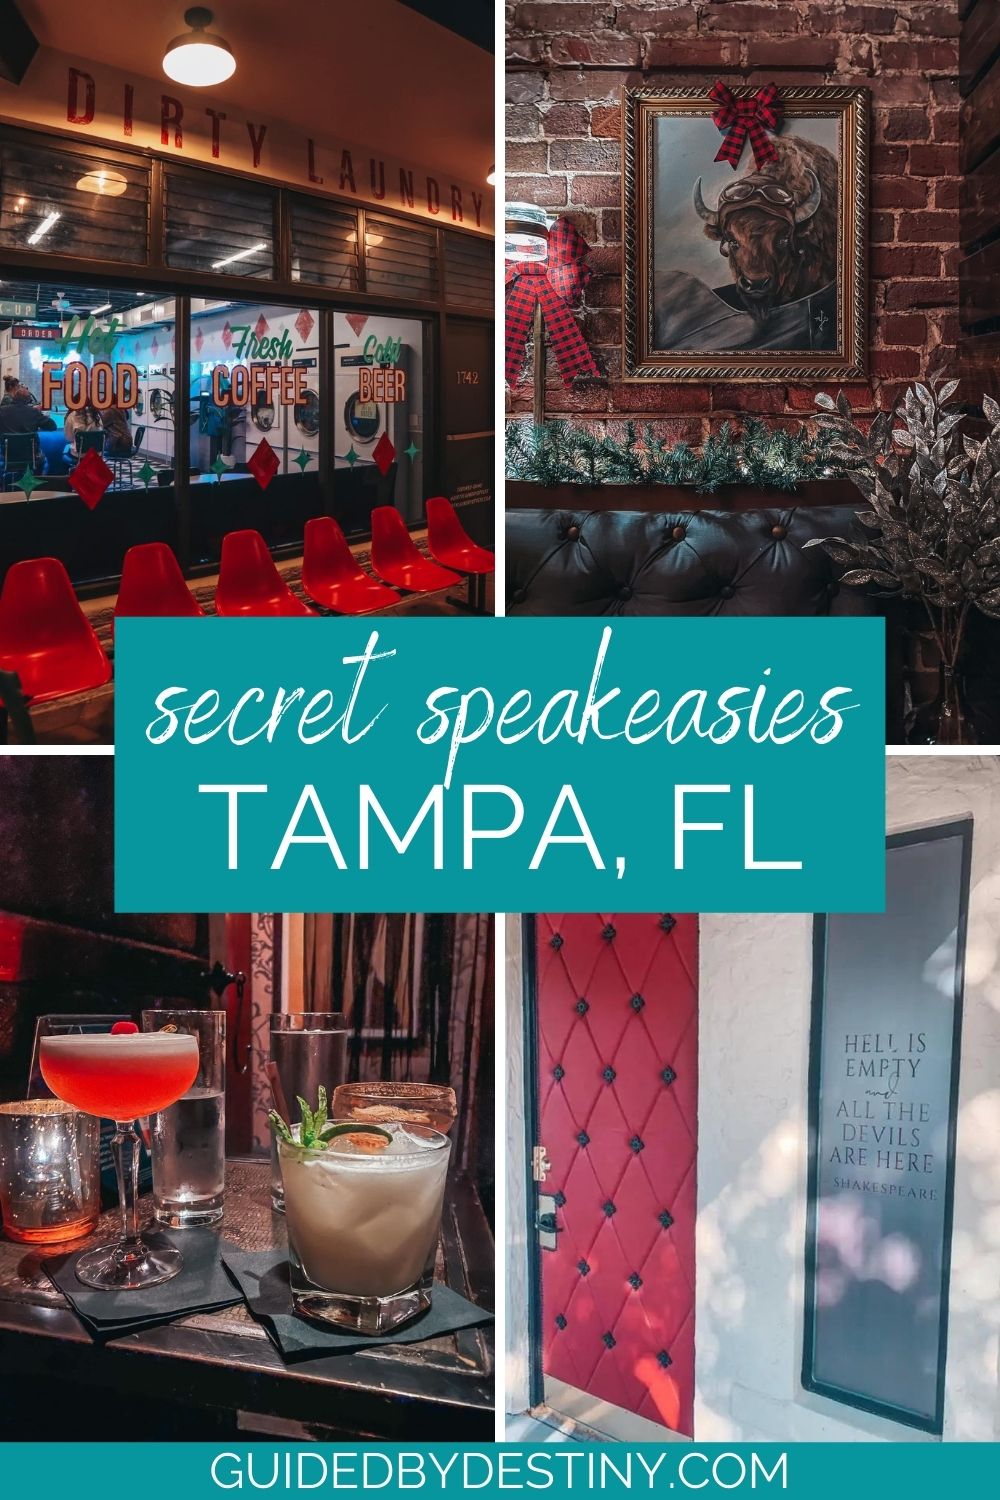 Secret speakeasies in Tampa Florida